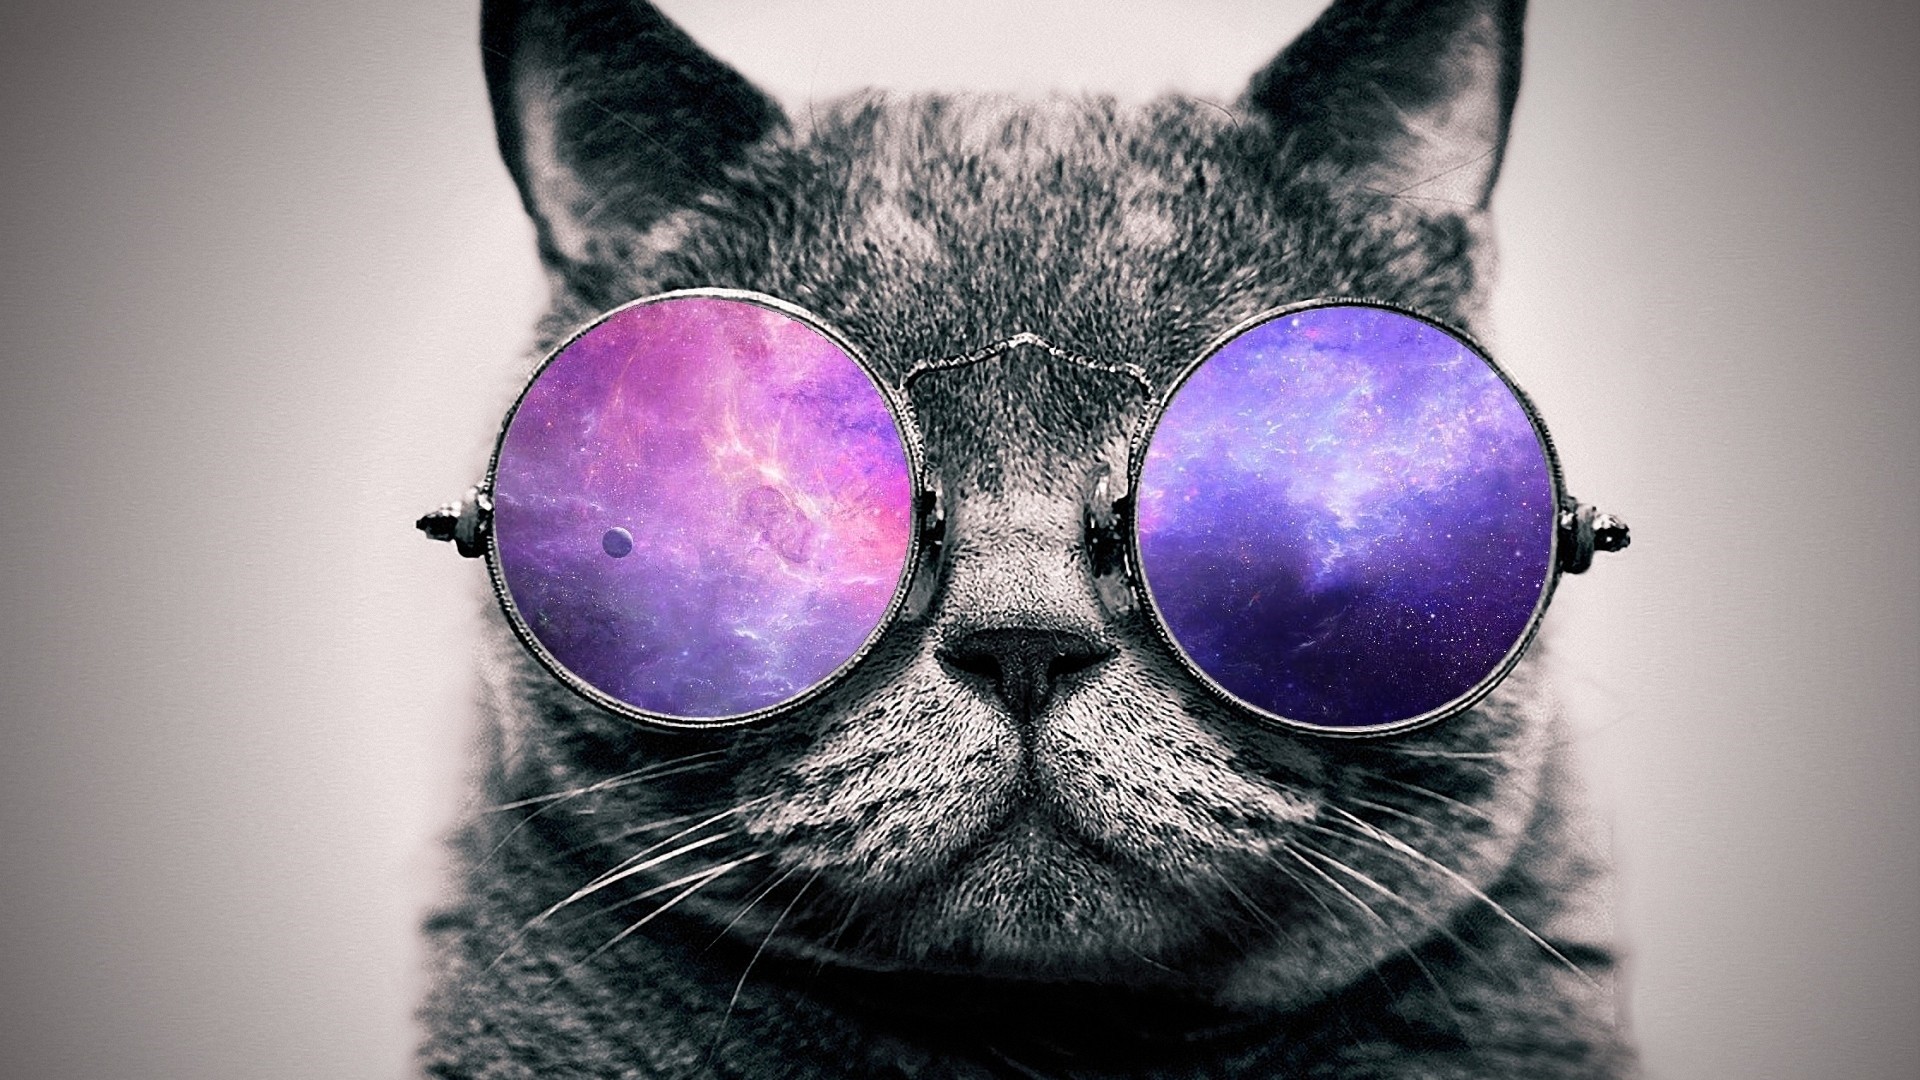 General 1920x1080 artwork digital art cats glasses animals purple frontal view mammals sunglasses space